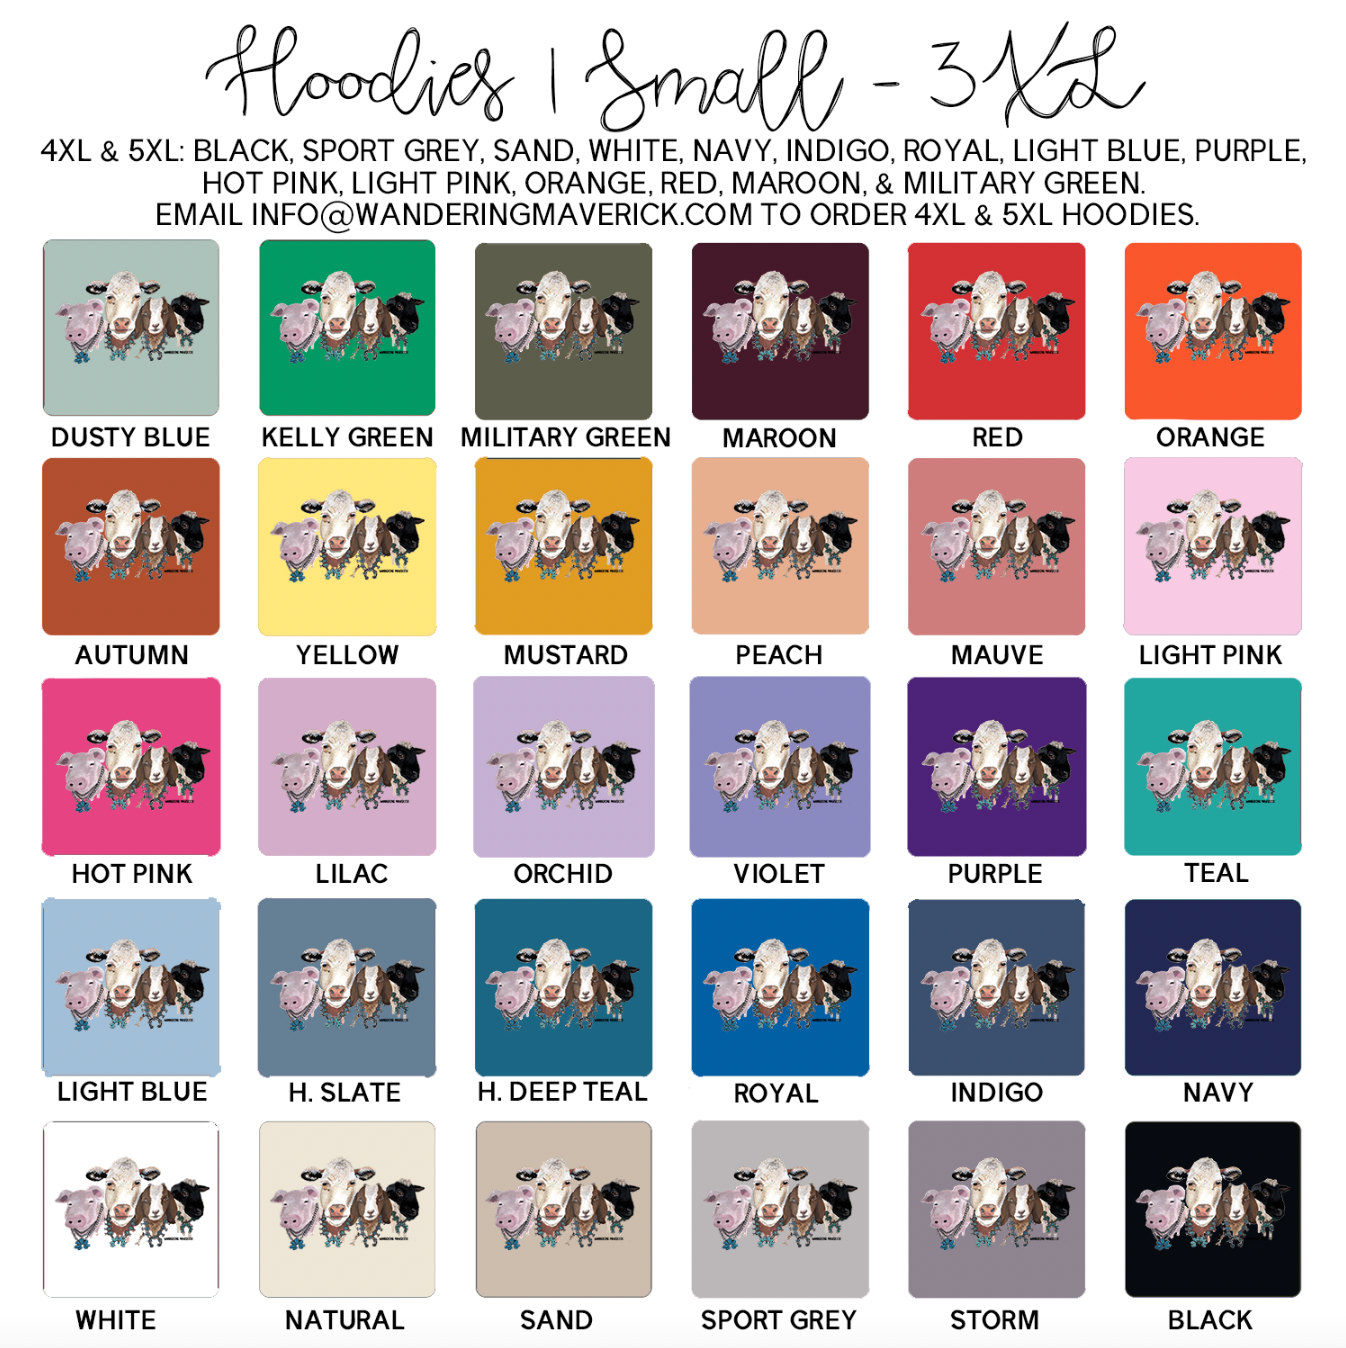 Stock & Squash Hoodie (S-3XL) Unisex - Multiple Colors!